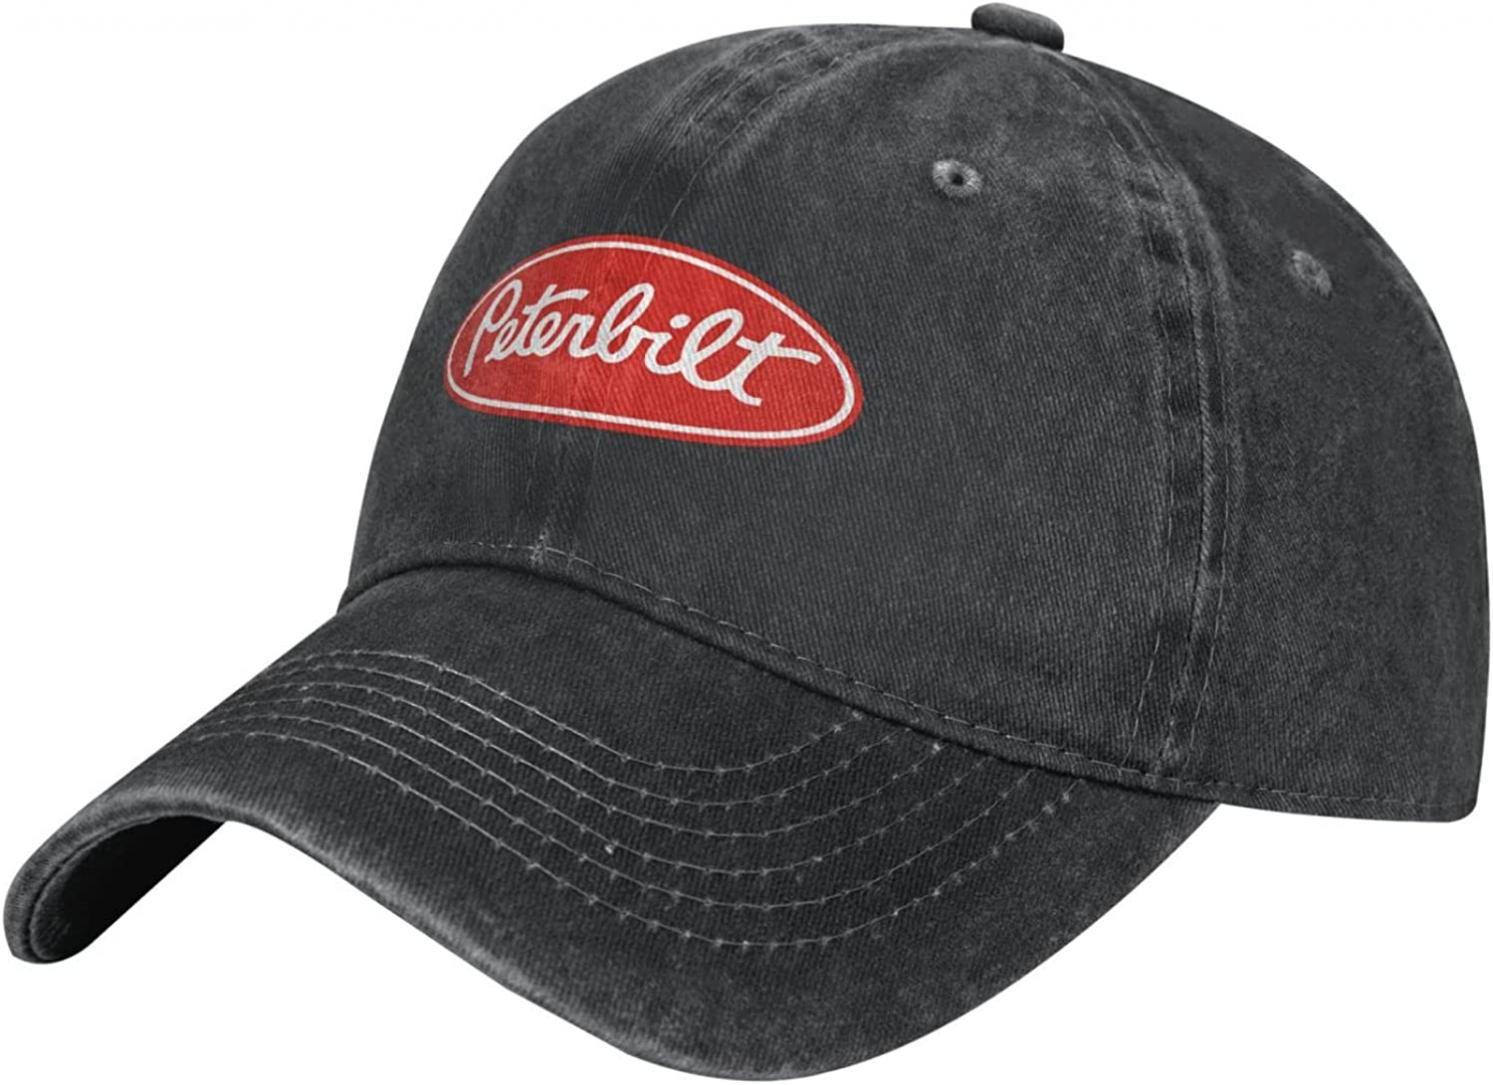 Peterbil-t Hat for Men Baseball Caps Adjustable Unisex Trucker Gifts Sun Hat Fashion Vintage Truck Cap